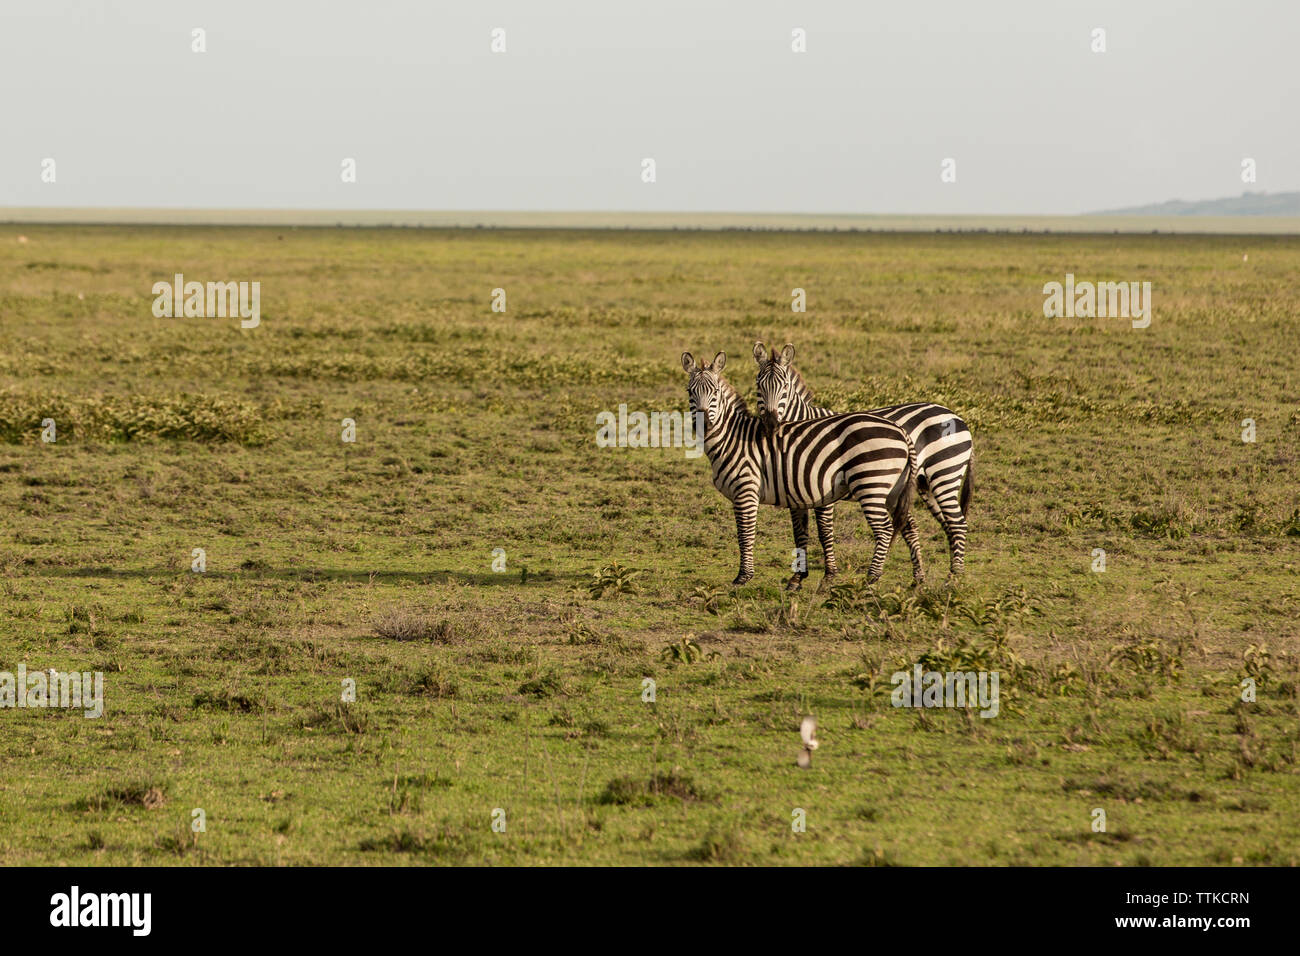 Zebras standing on field Stock Photo